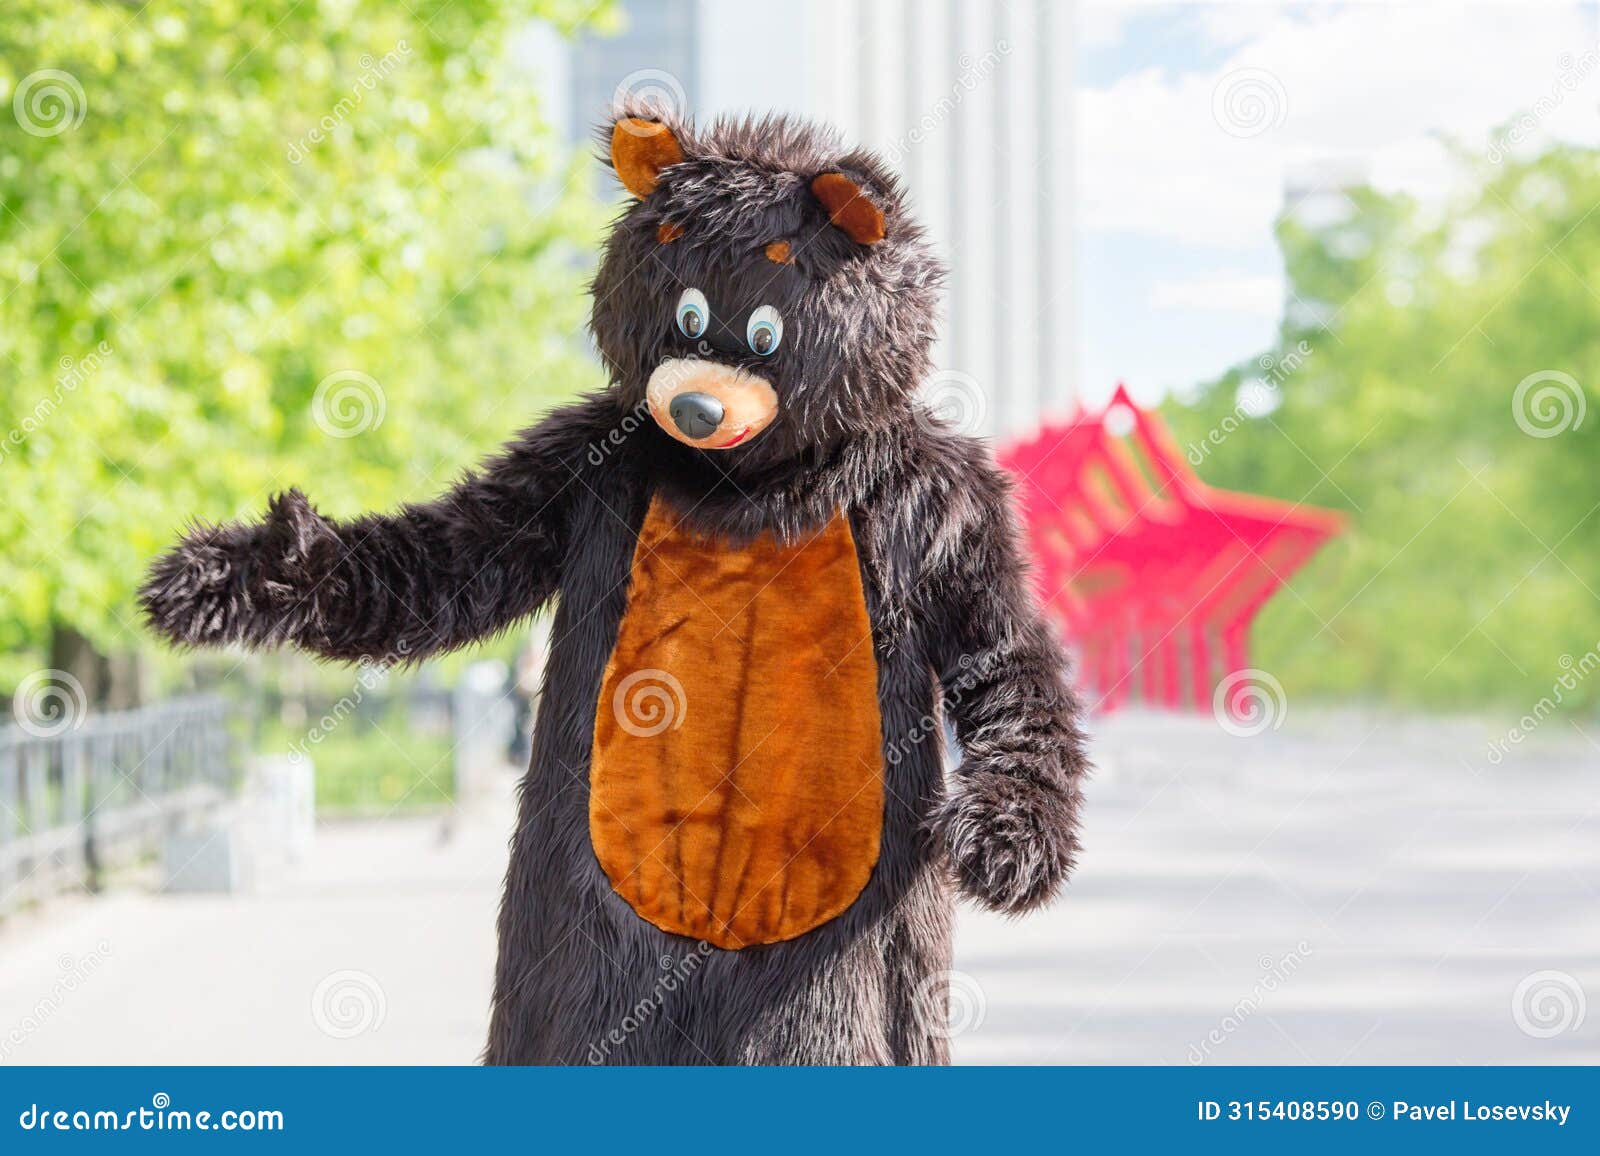 actor dressed as bear walks avenue of park on